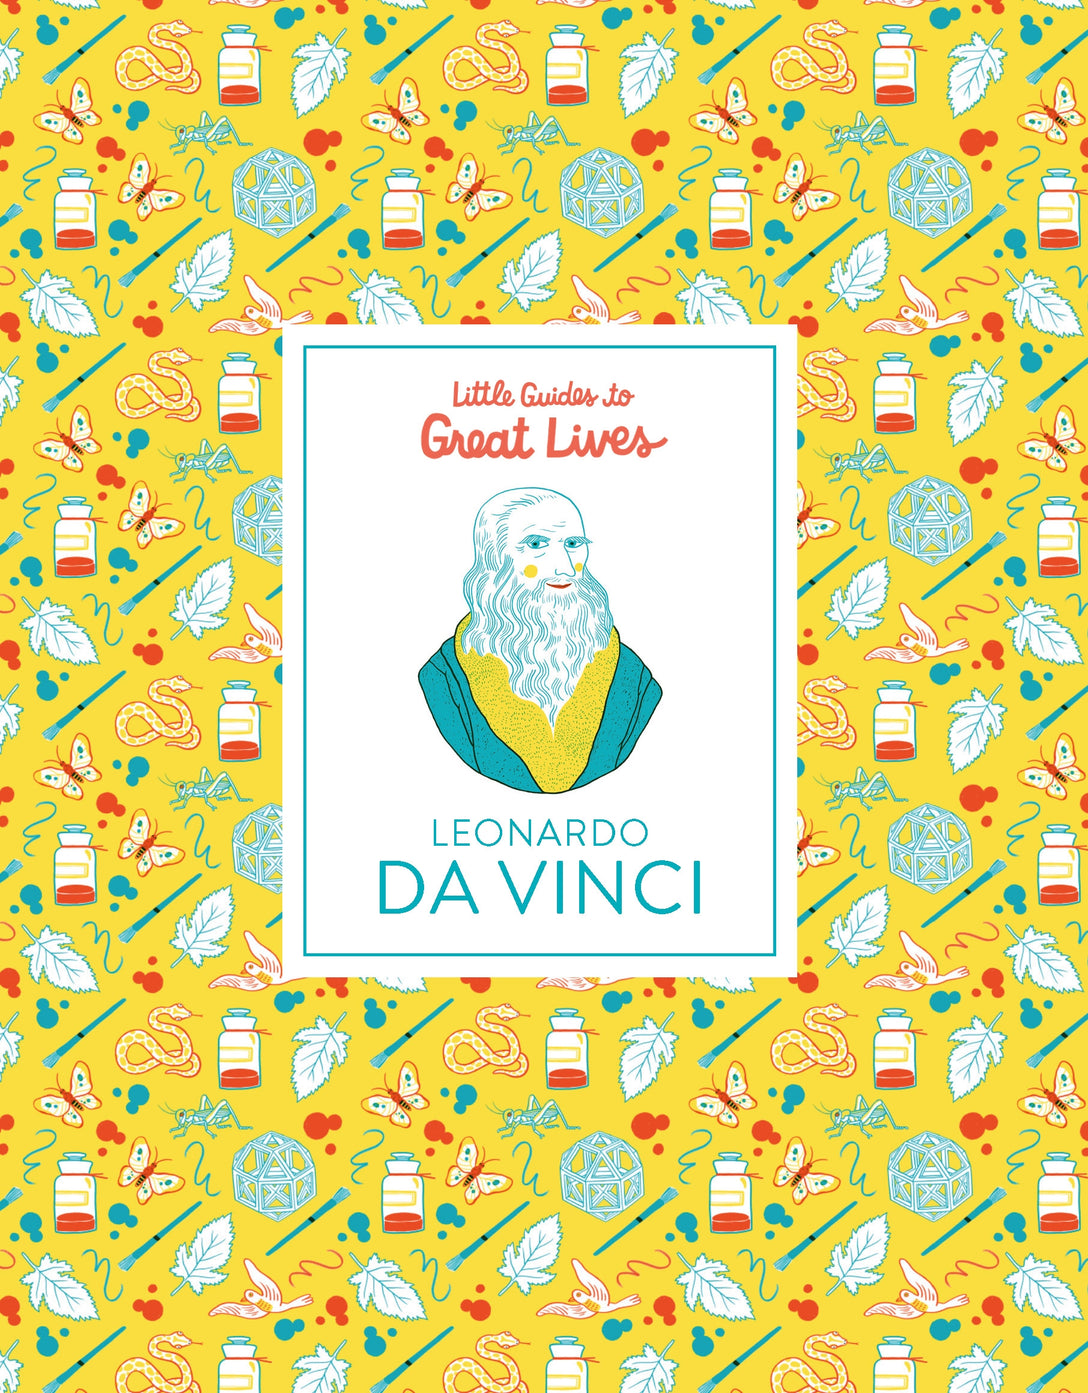 Little Guides to Great Lives: Leonardo Da Vinci by Katja Spitzer, Isabel Thomas